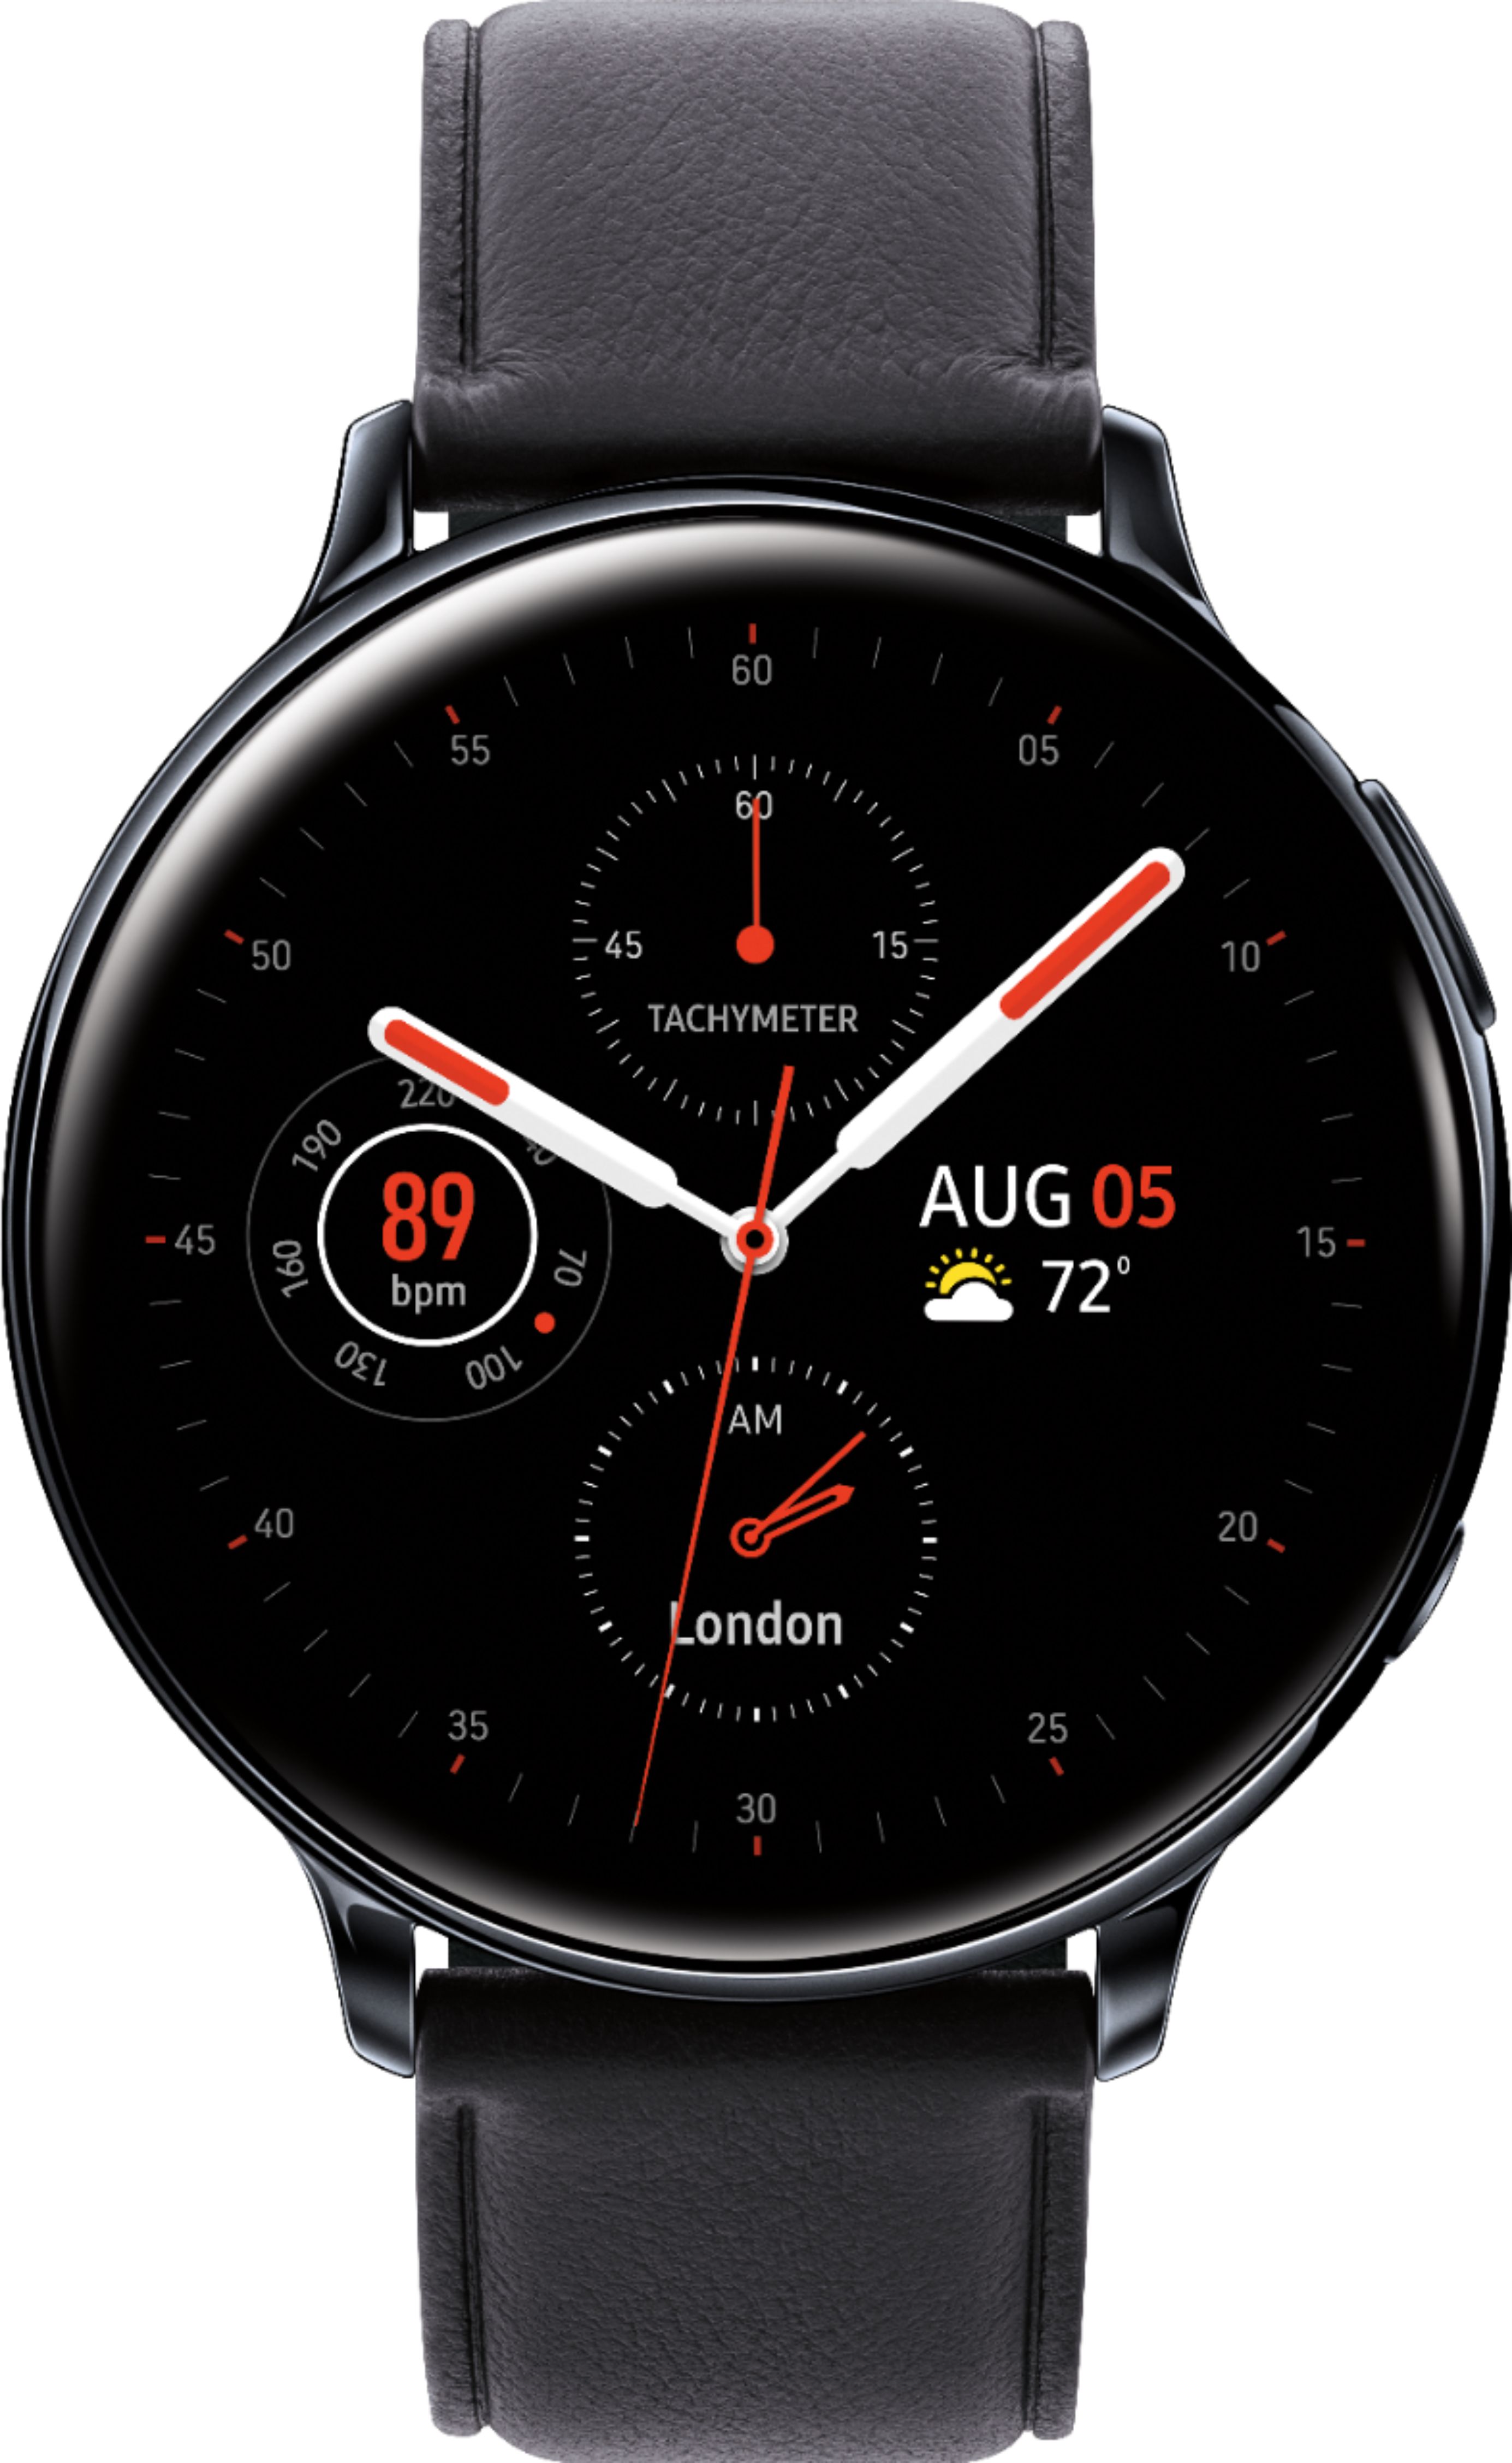 sprint smartwatch deals